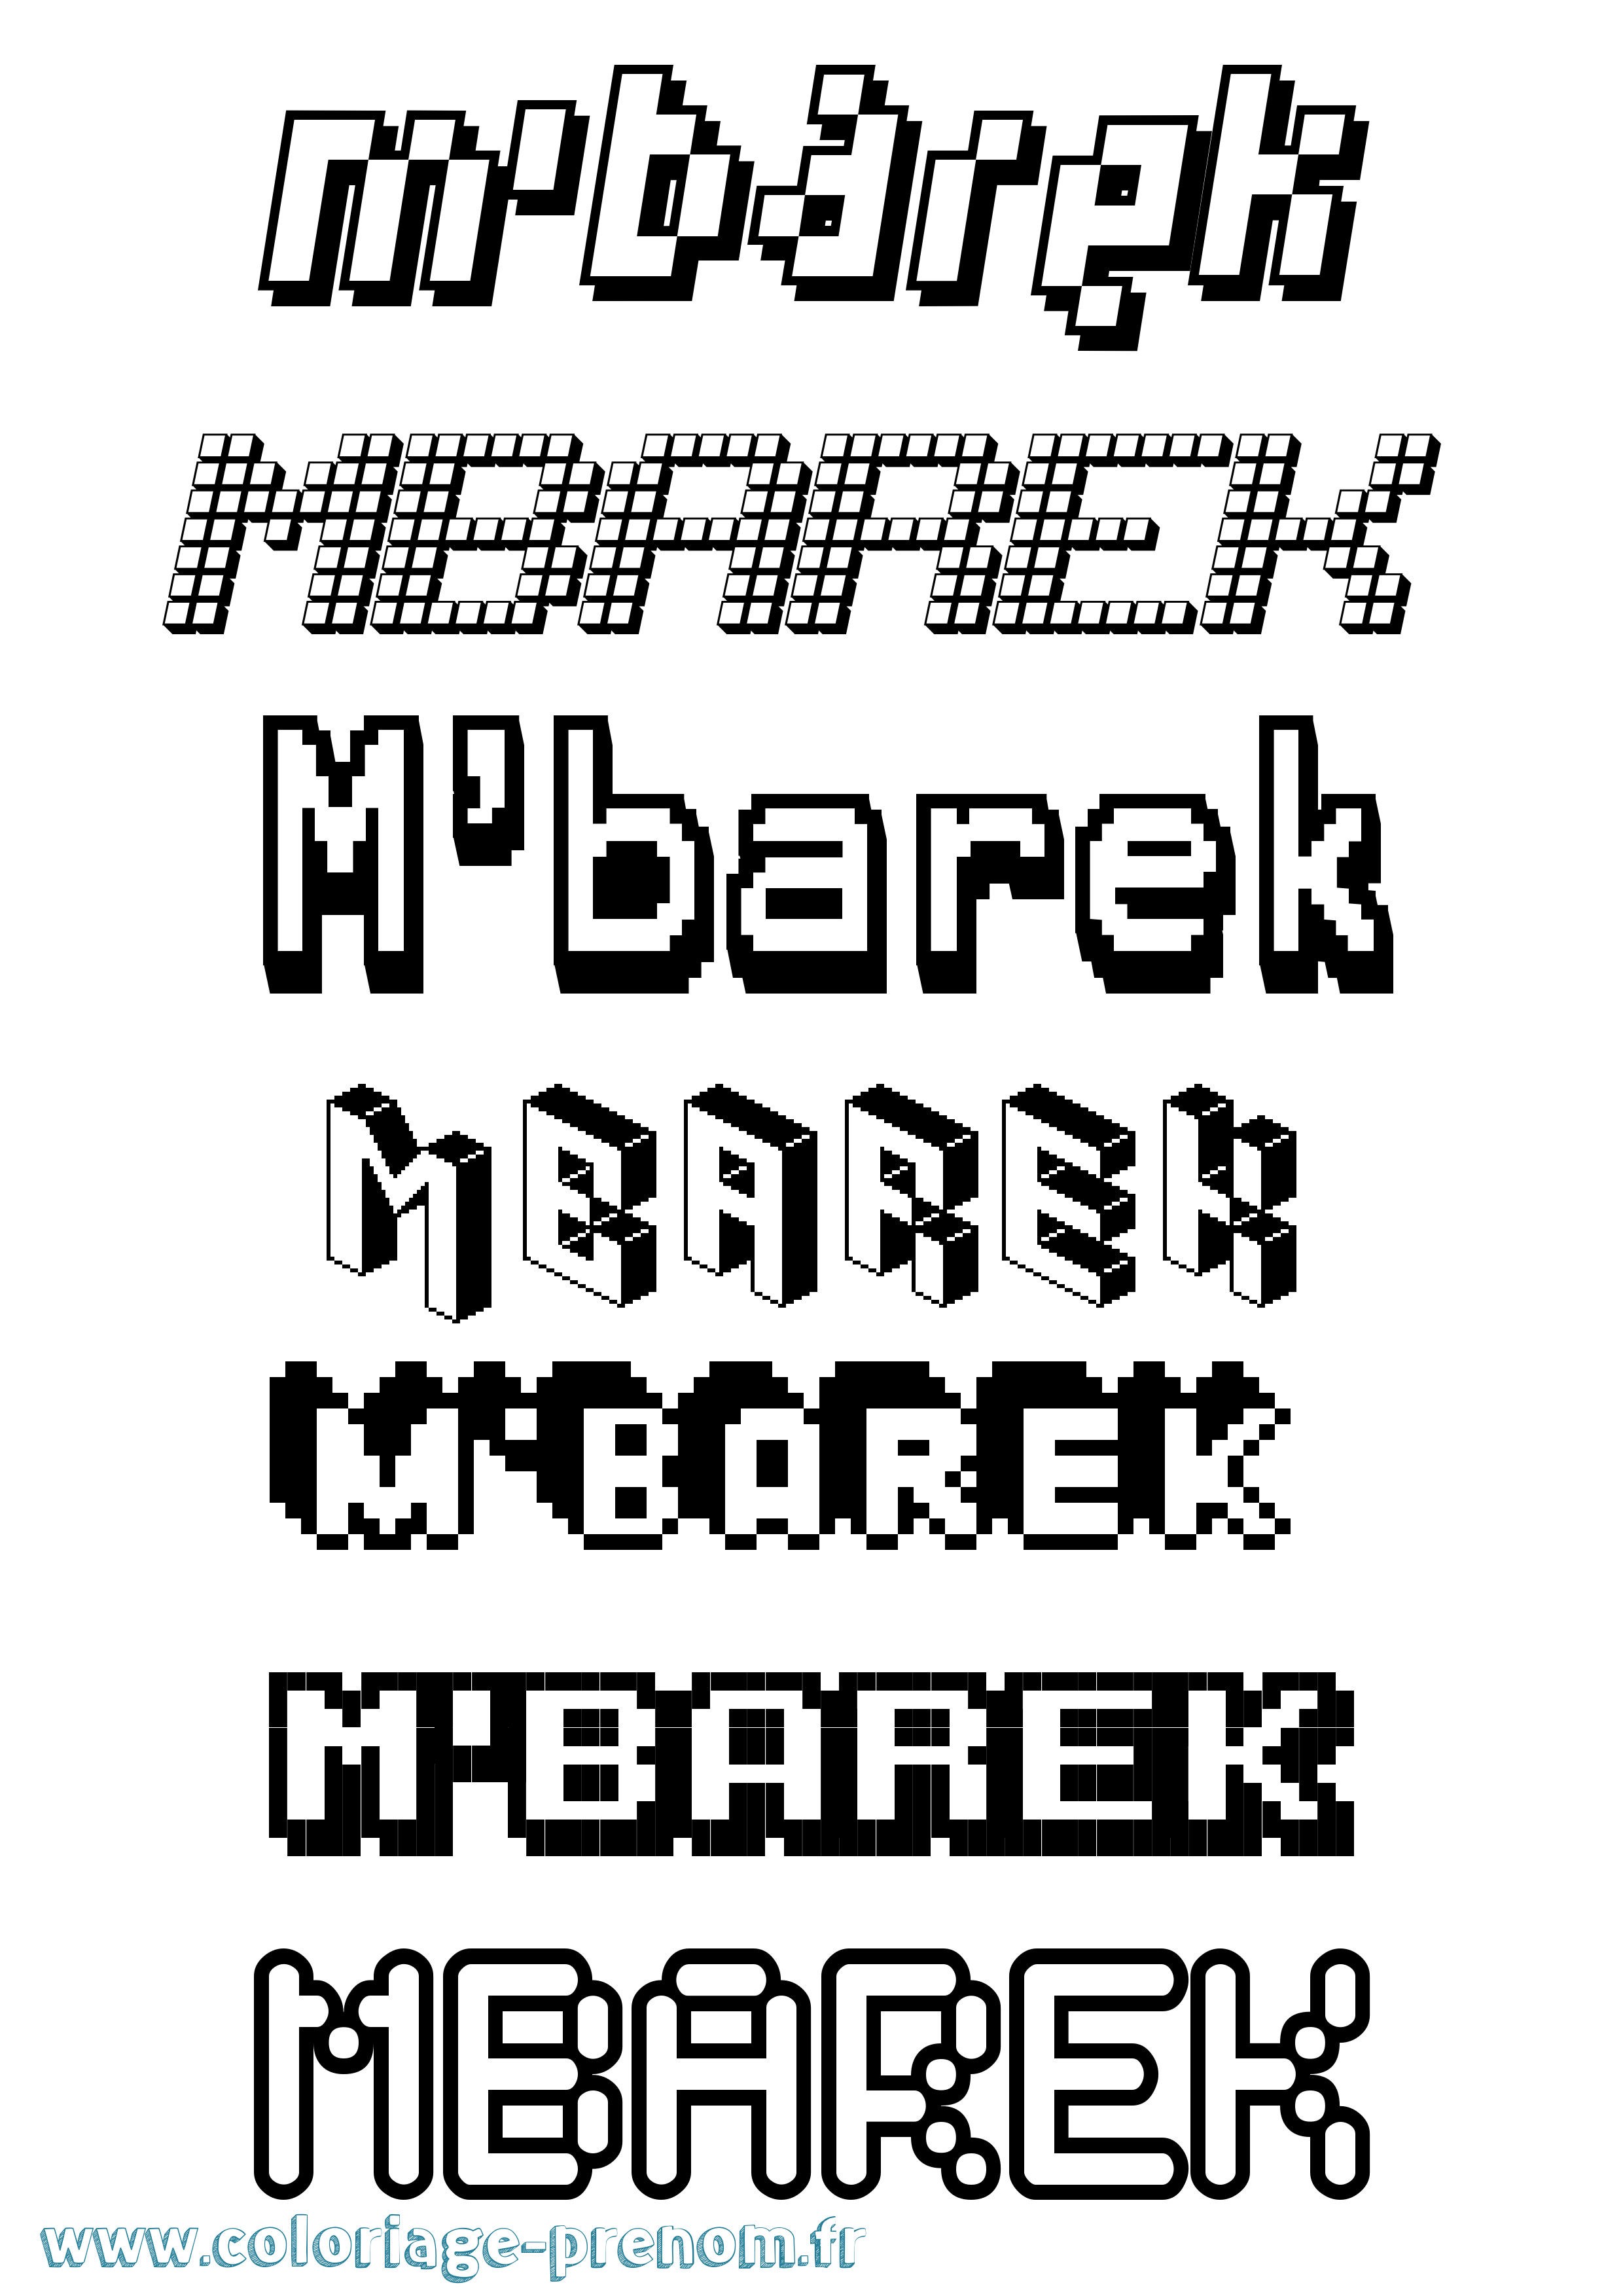 Coloriage prénom M'Barek Pixel